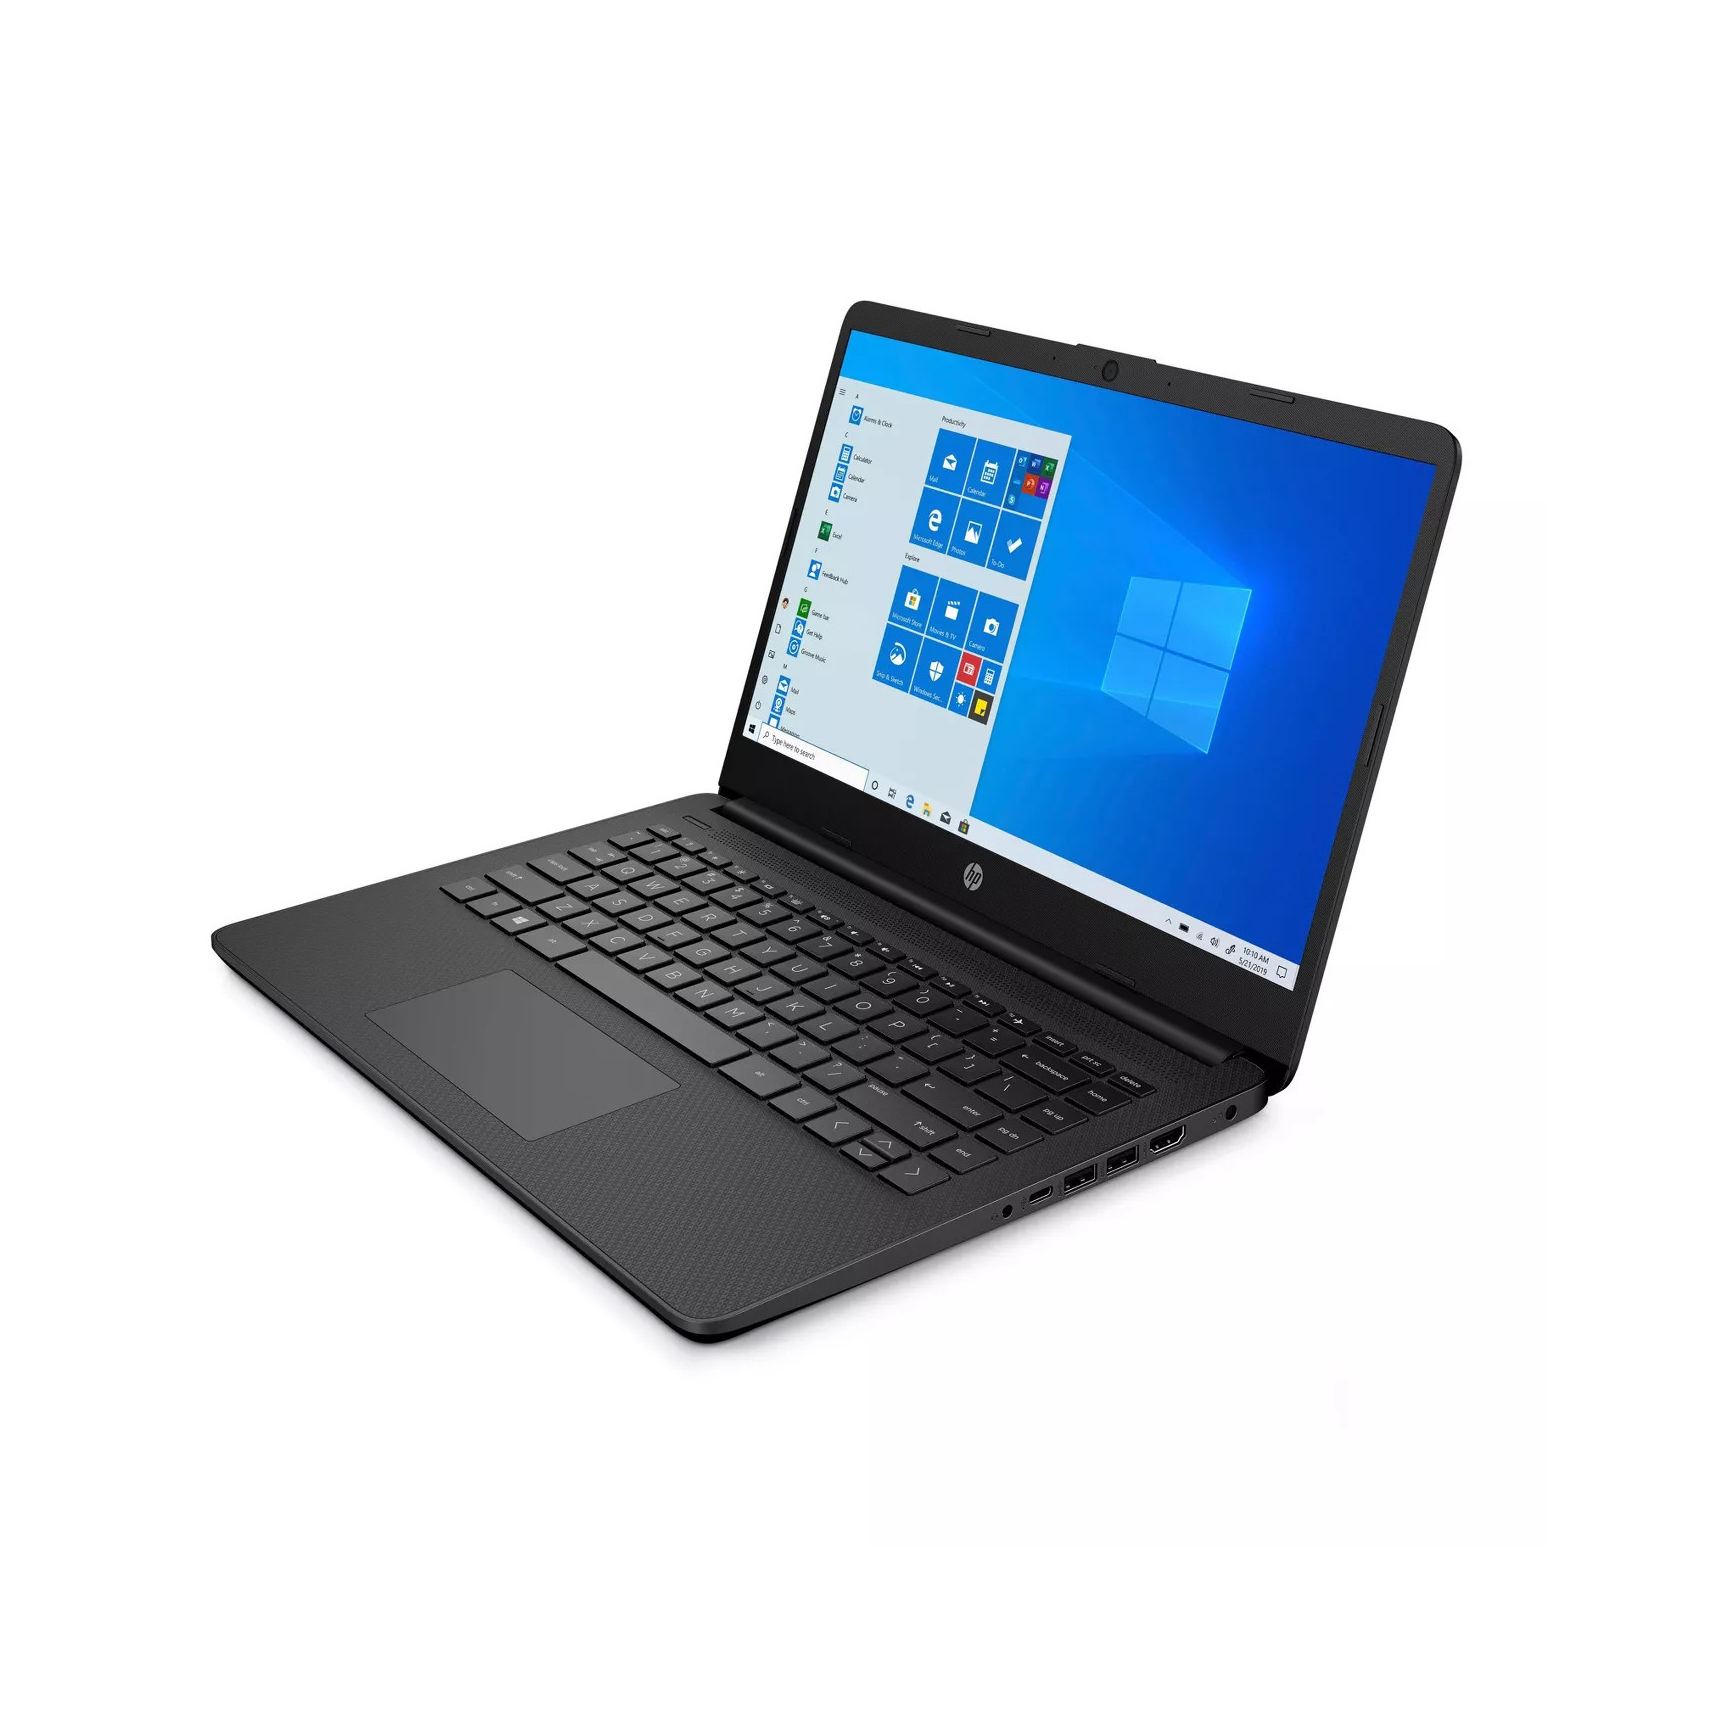 Laptop HP 14-dq1025nr - Intel core i3-1005G1, 4GB RAM, SSD 128GB, Intel HD Graphics 620, 14 inch